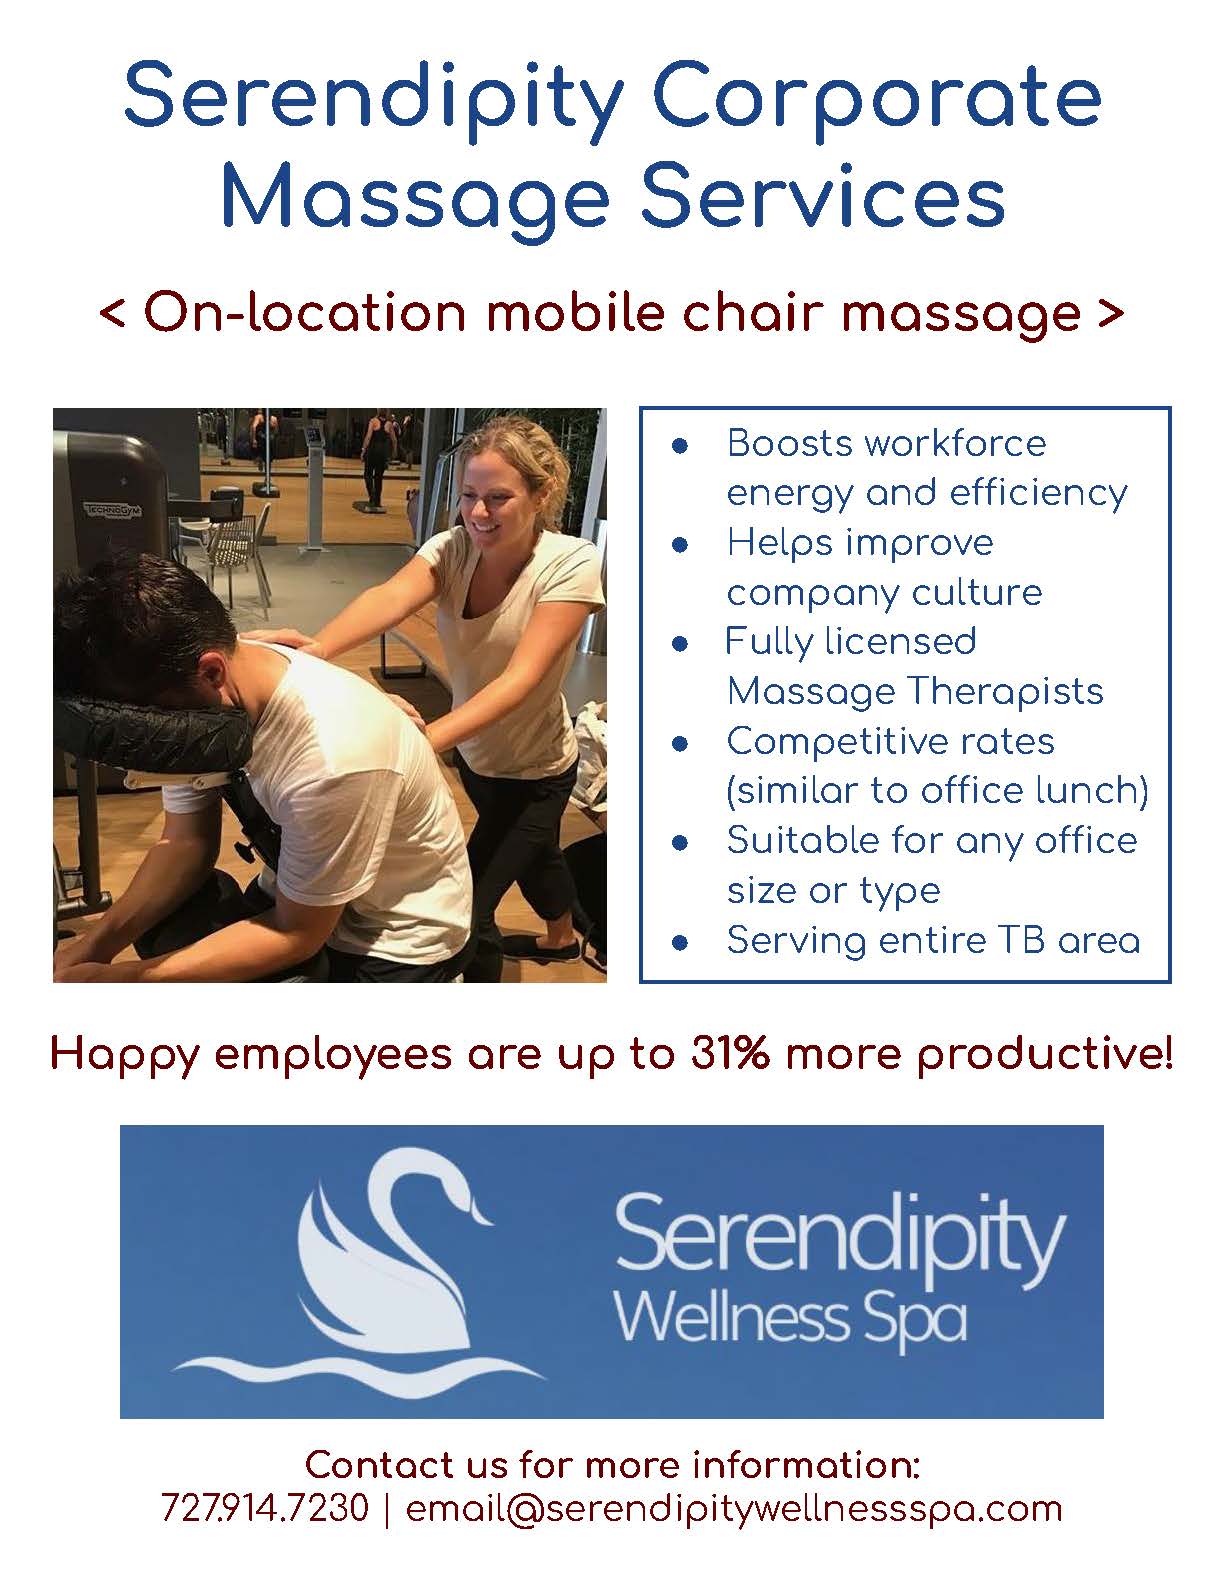 Serendipity Corporate Massage Services flyer